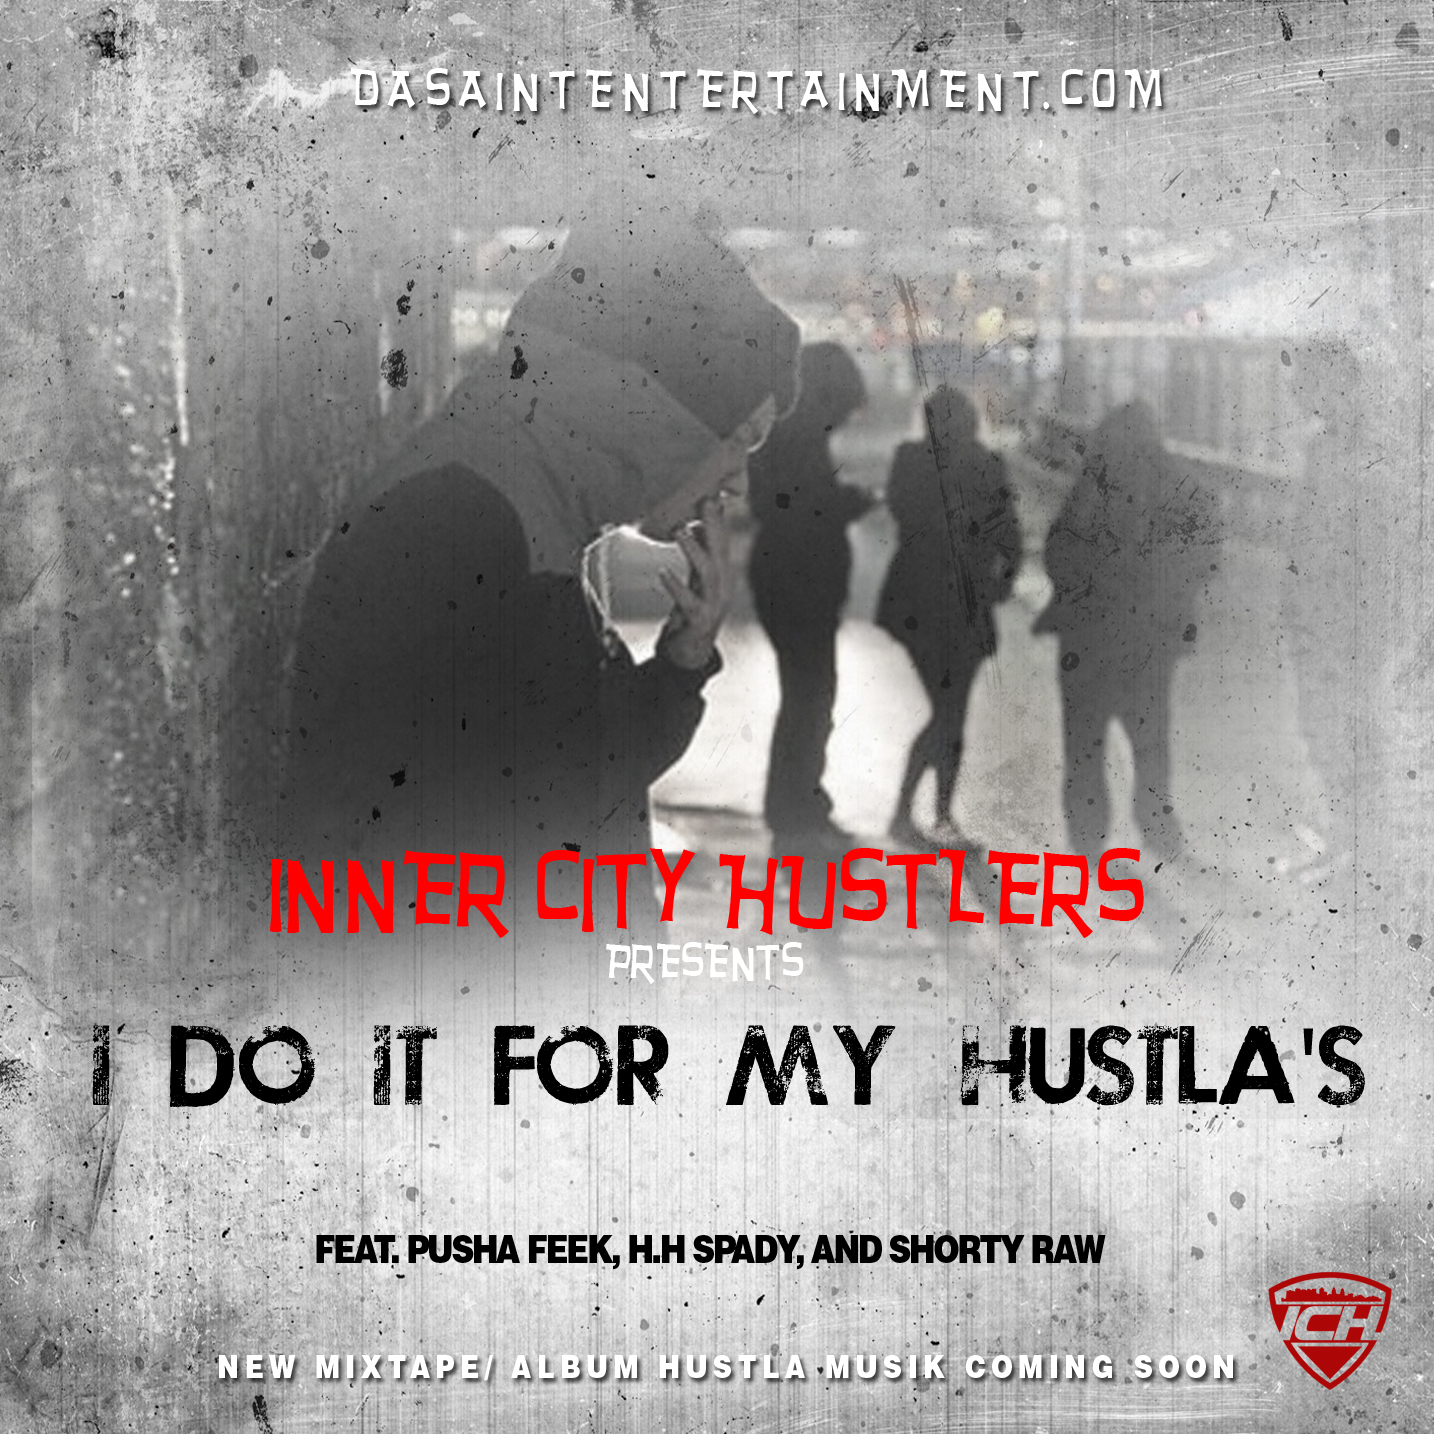 JimmyDaSaint-cd-cover-idifmh ICH Gang - I Do It For My Hustlas  